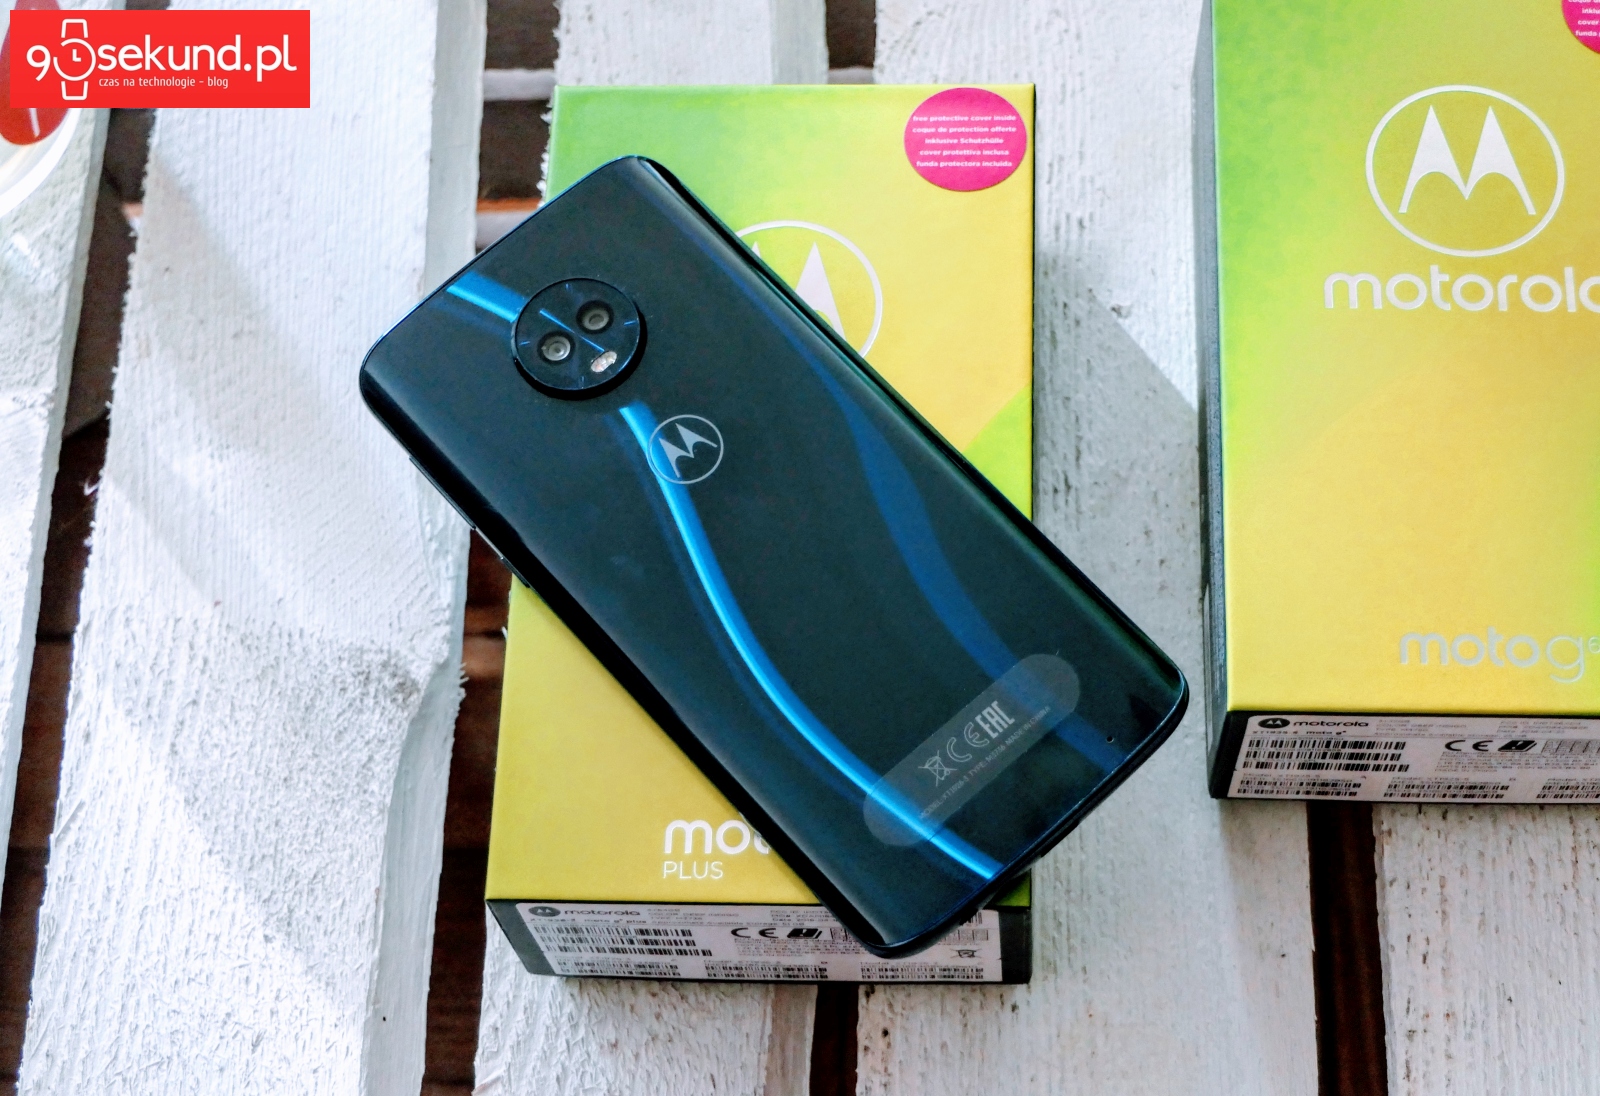 Recenzja Motorola Moto G6 Plus - 90sekund.pl